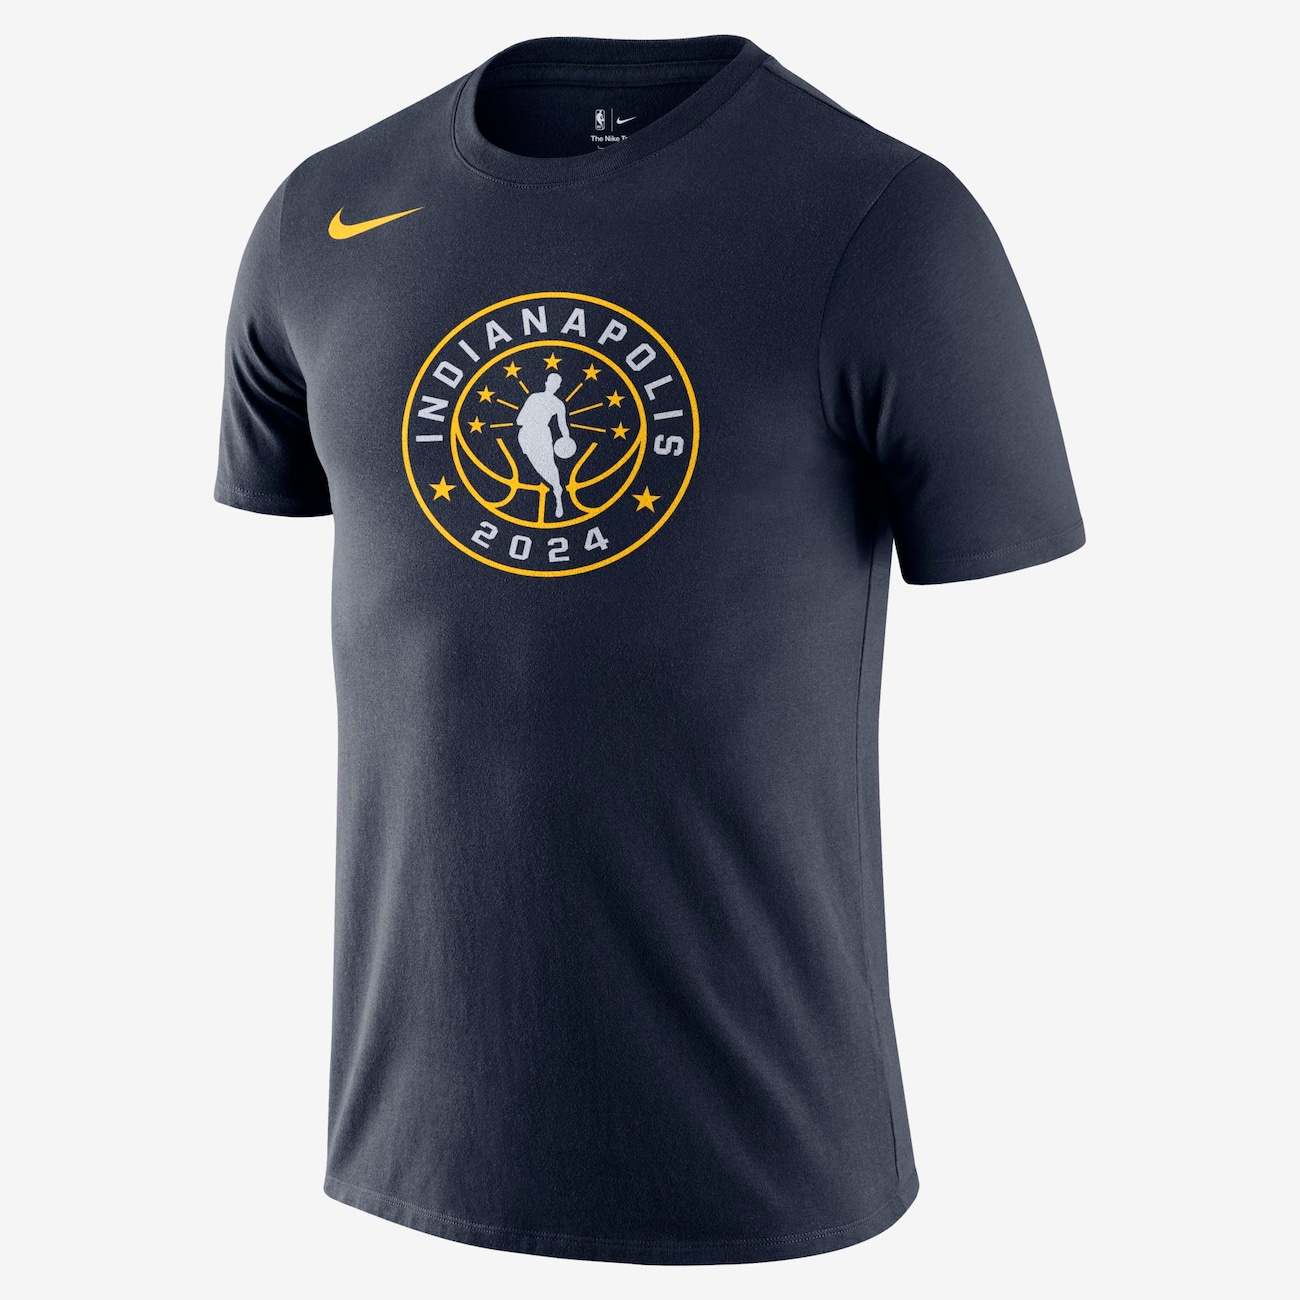 Camisa Nike Pro Dri-FIT NBA Masculina - Preto